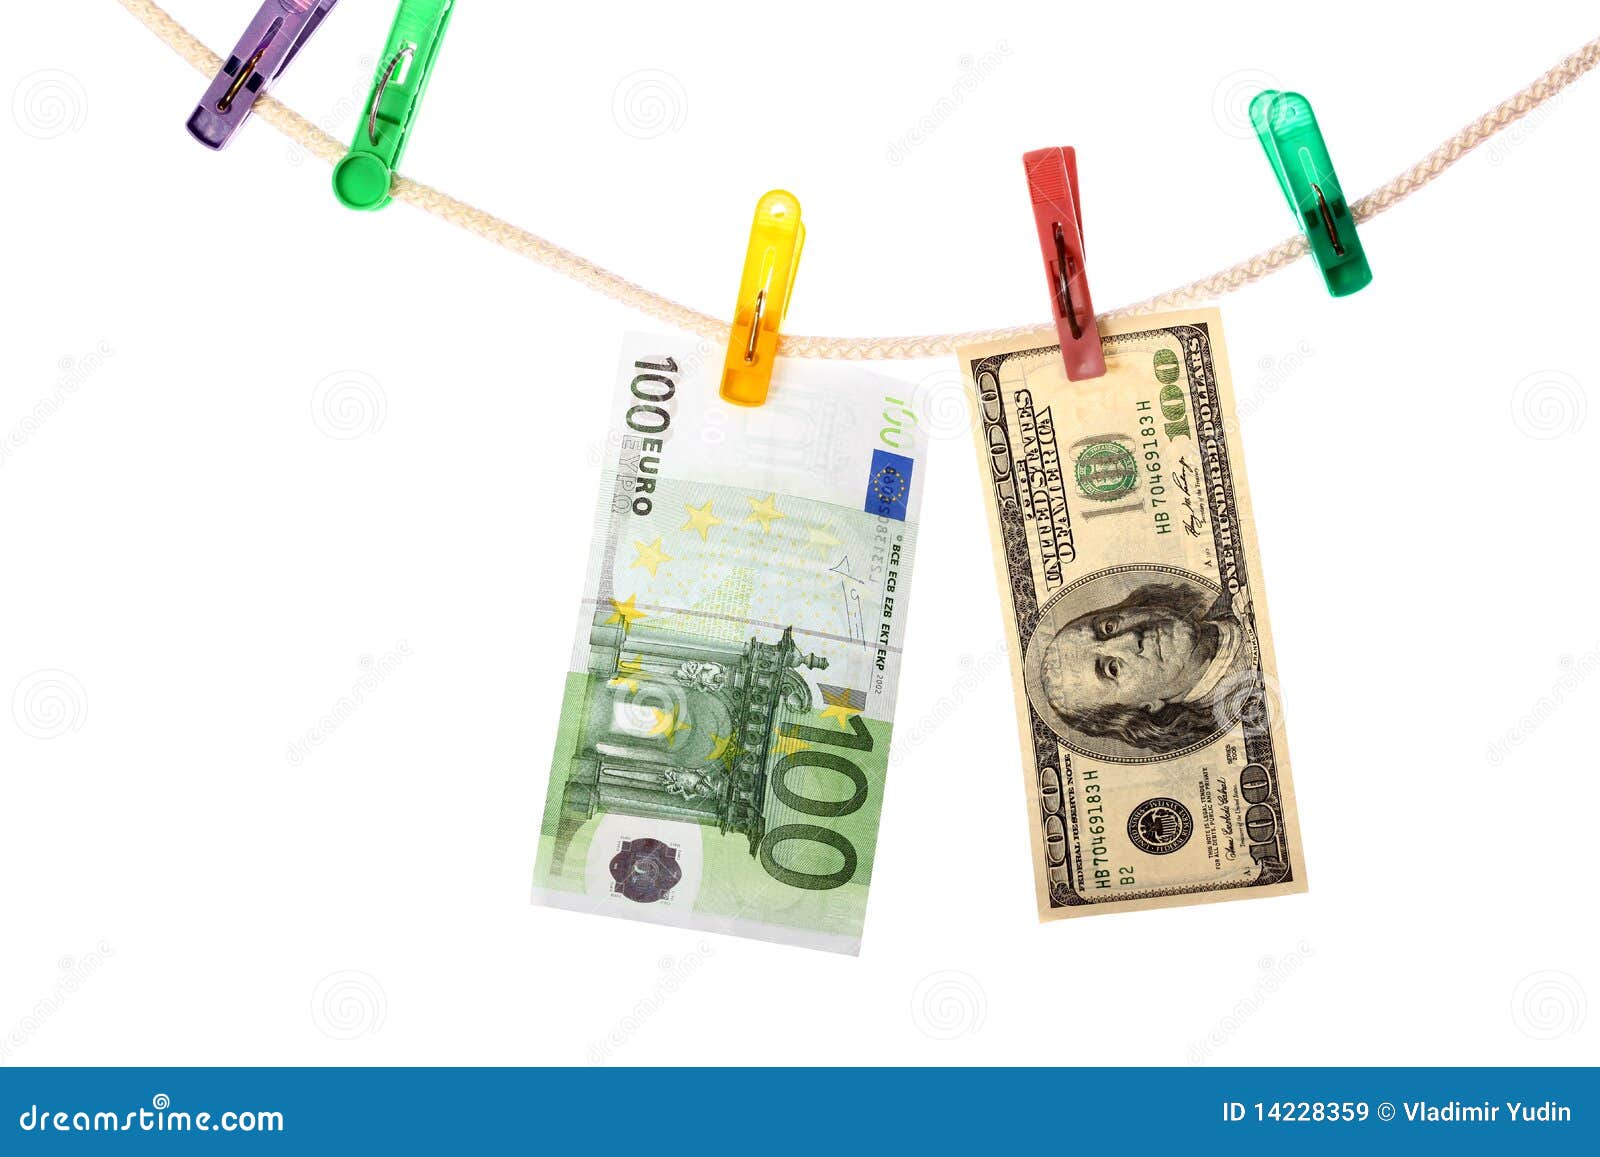 money laundering clip art - photo #14